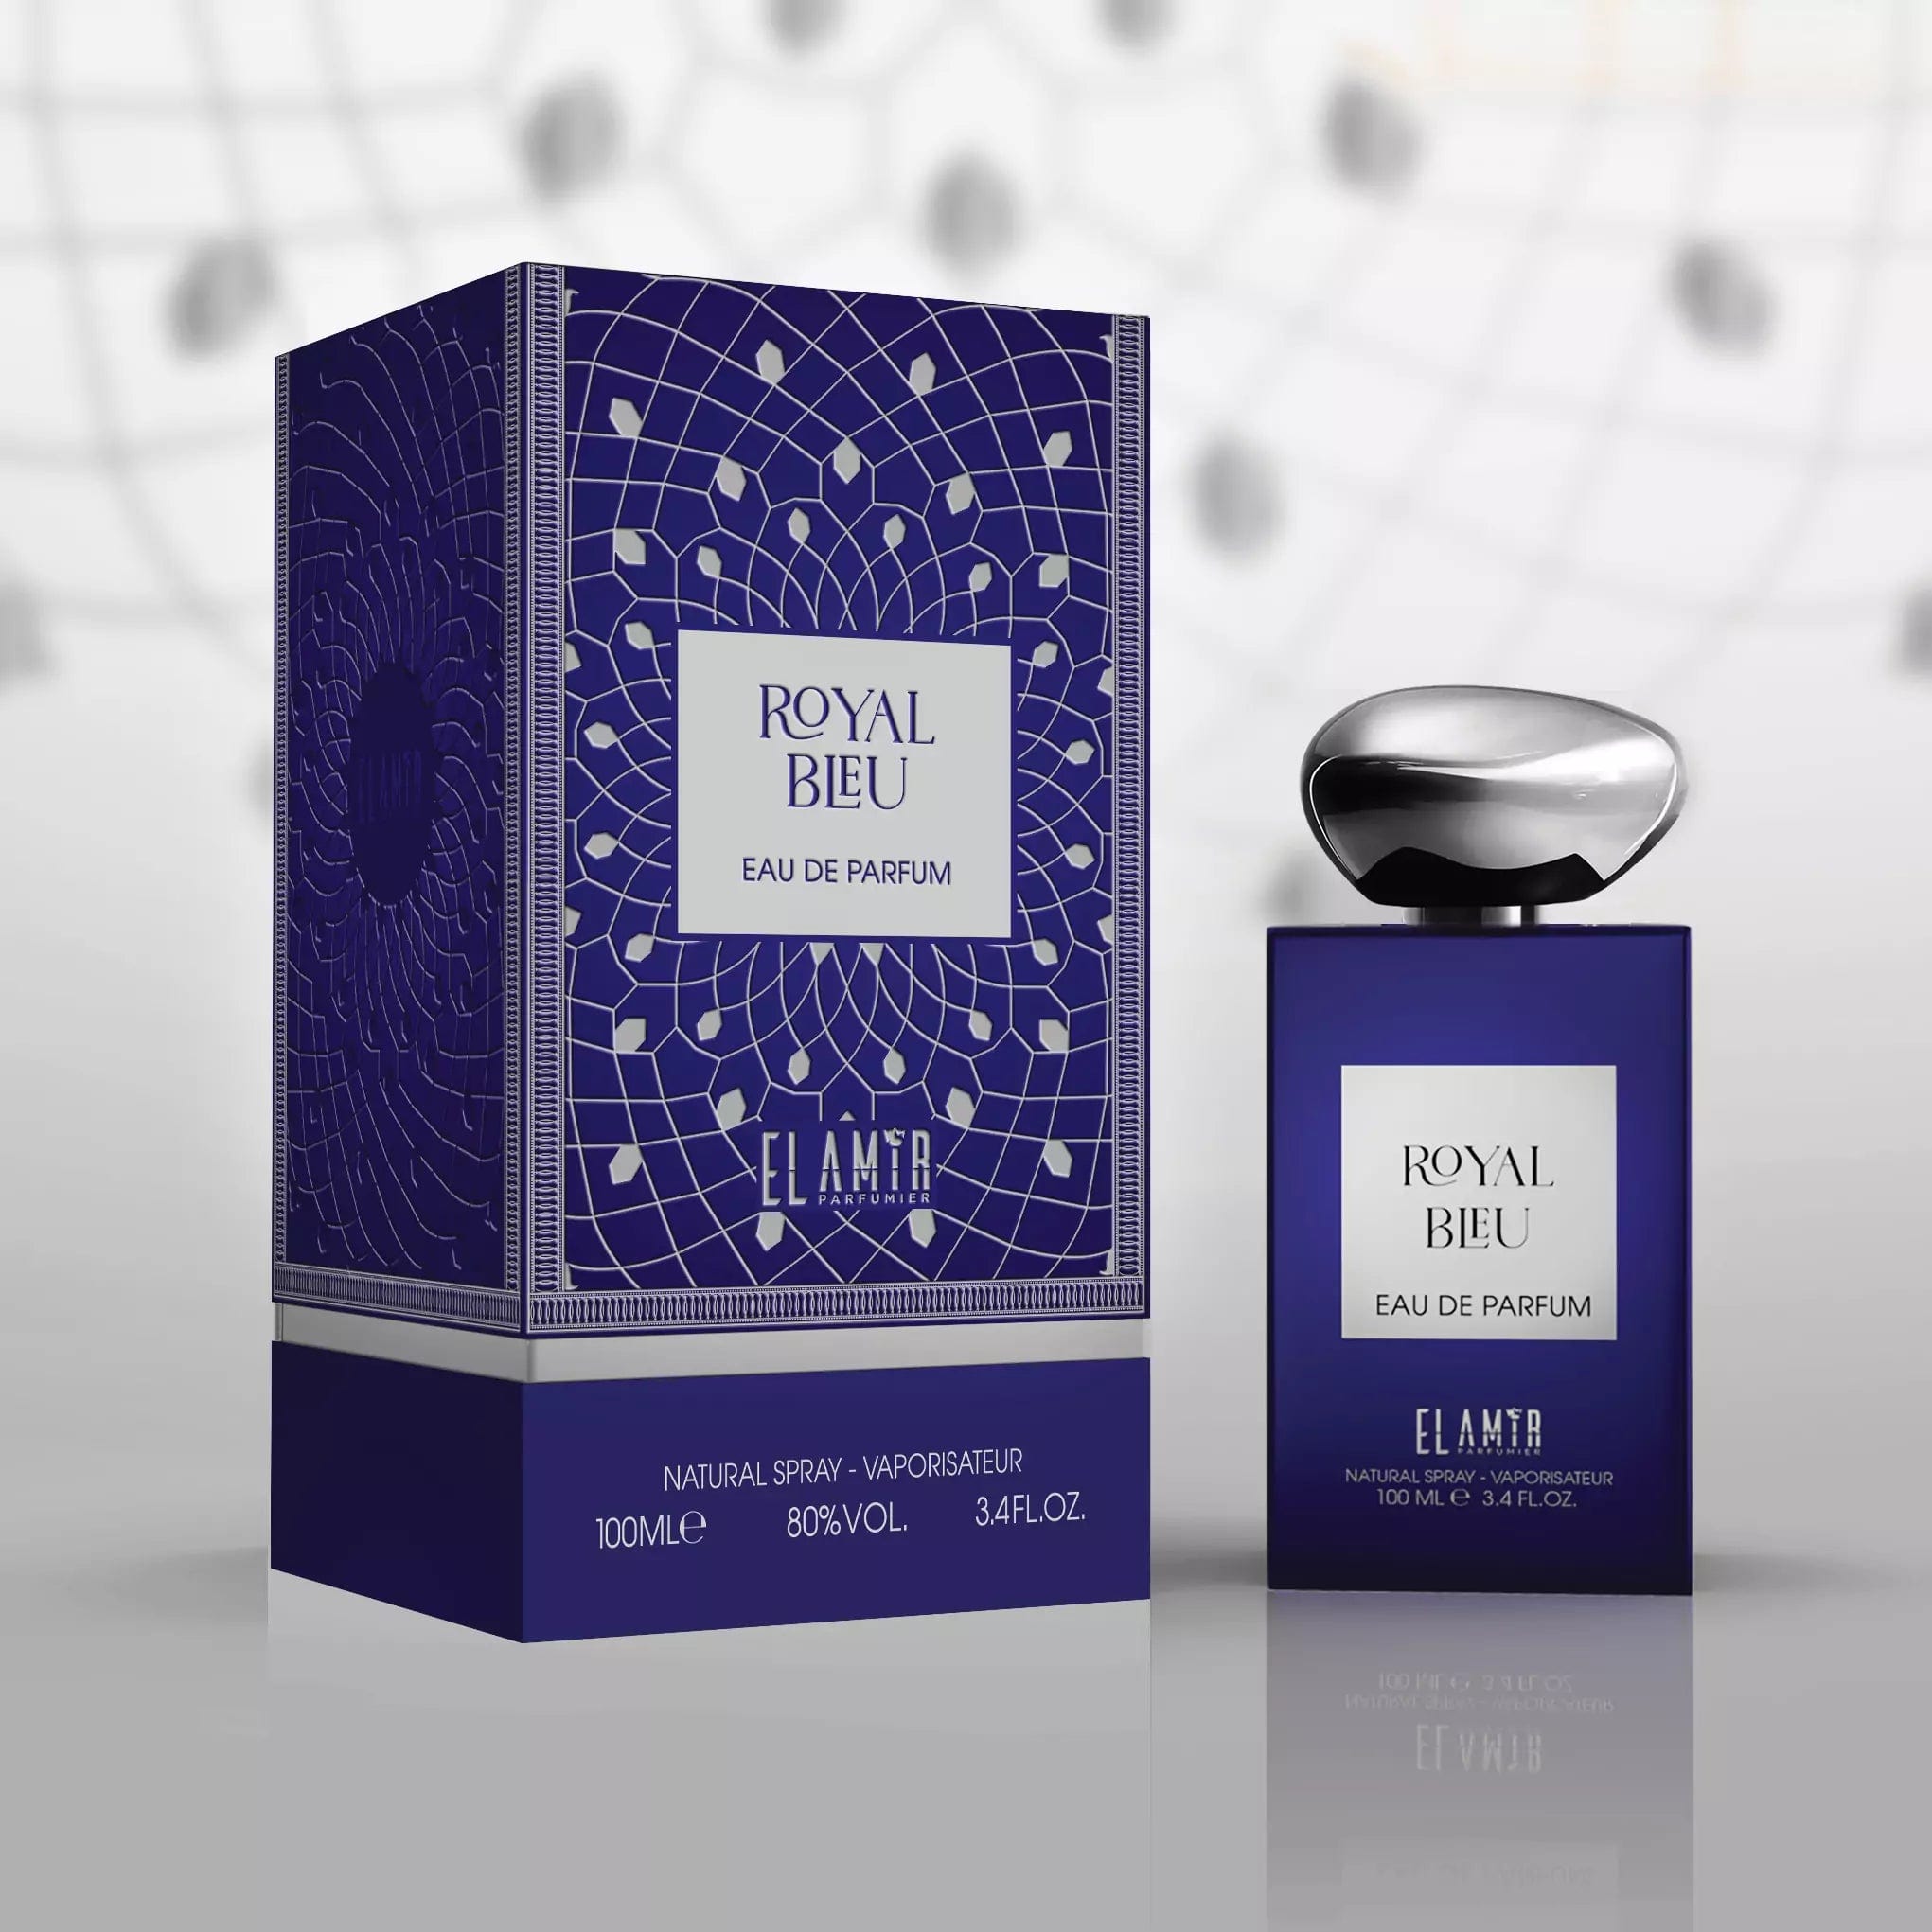 DeenSouvenir Royal Bleu Eau de Parfum von EL AMIR - 100ml Herrenduft für Charisma